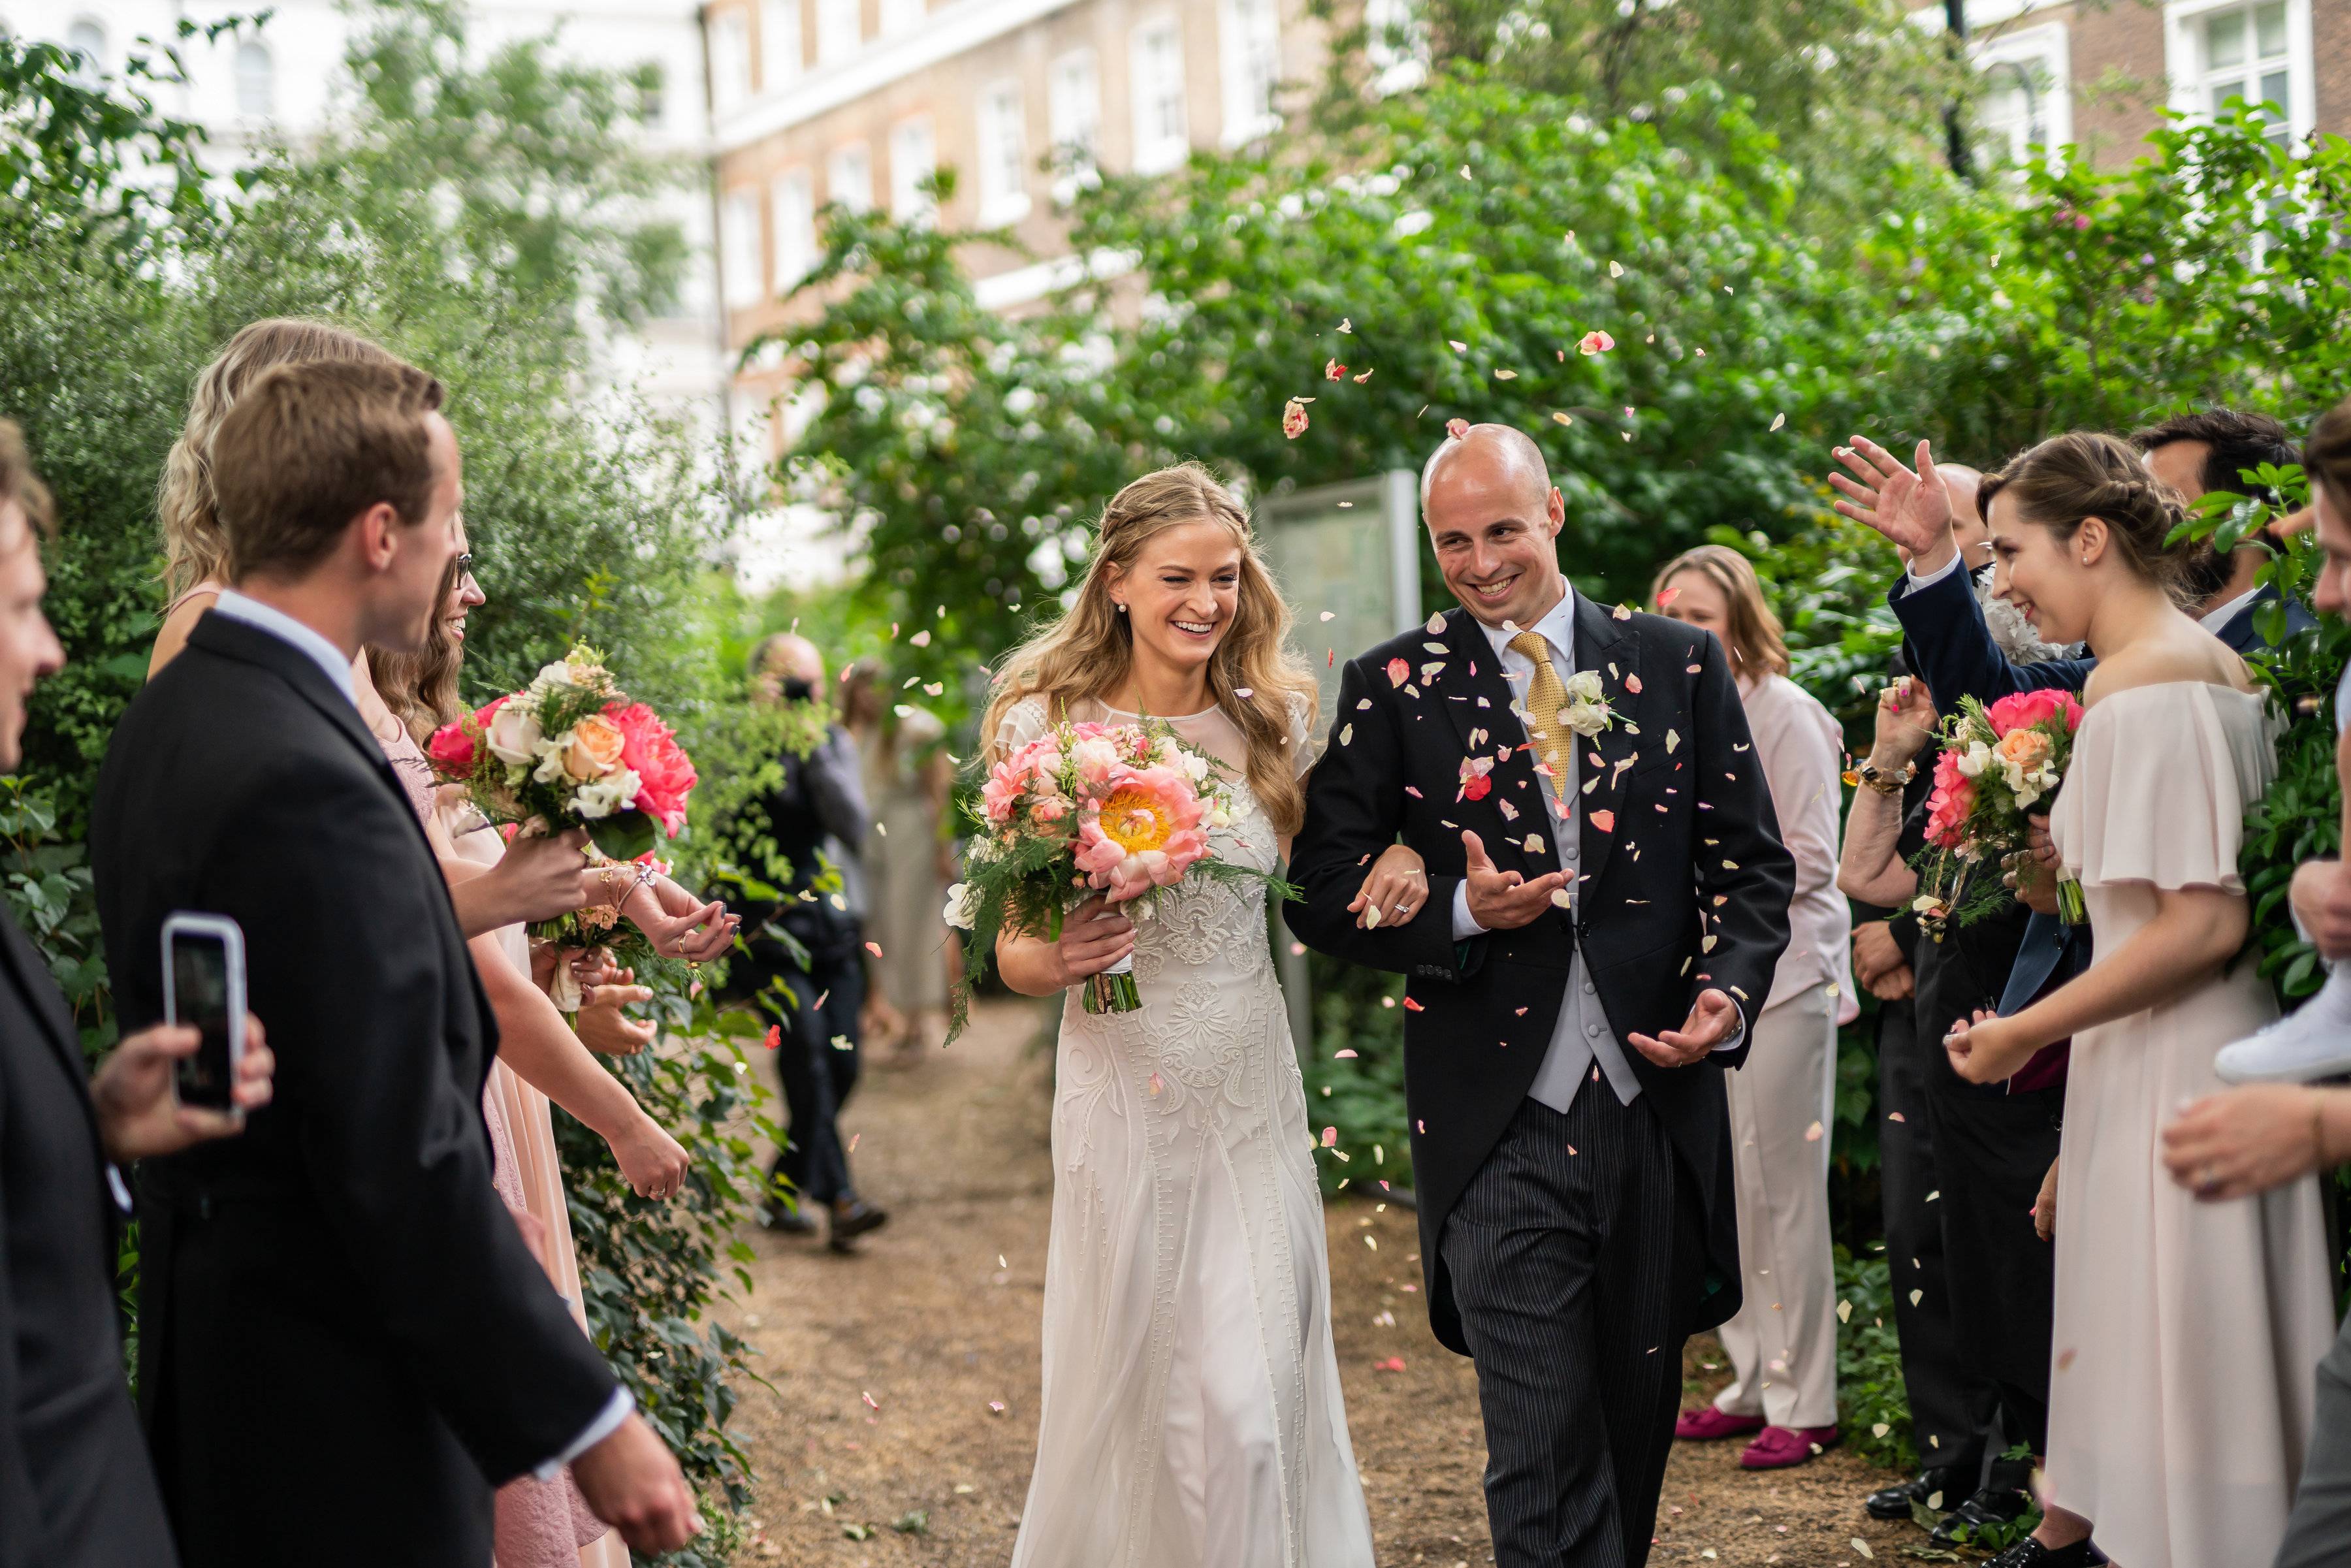 Wedding reception in Manchester Square Gardens, Confetti wedding shot, garden party